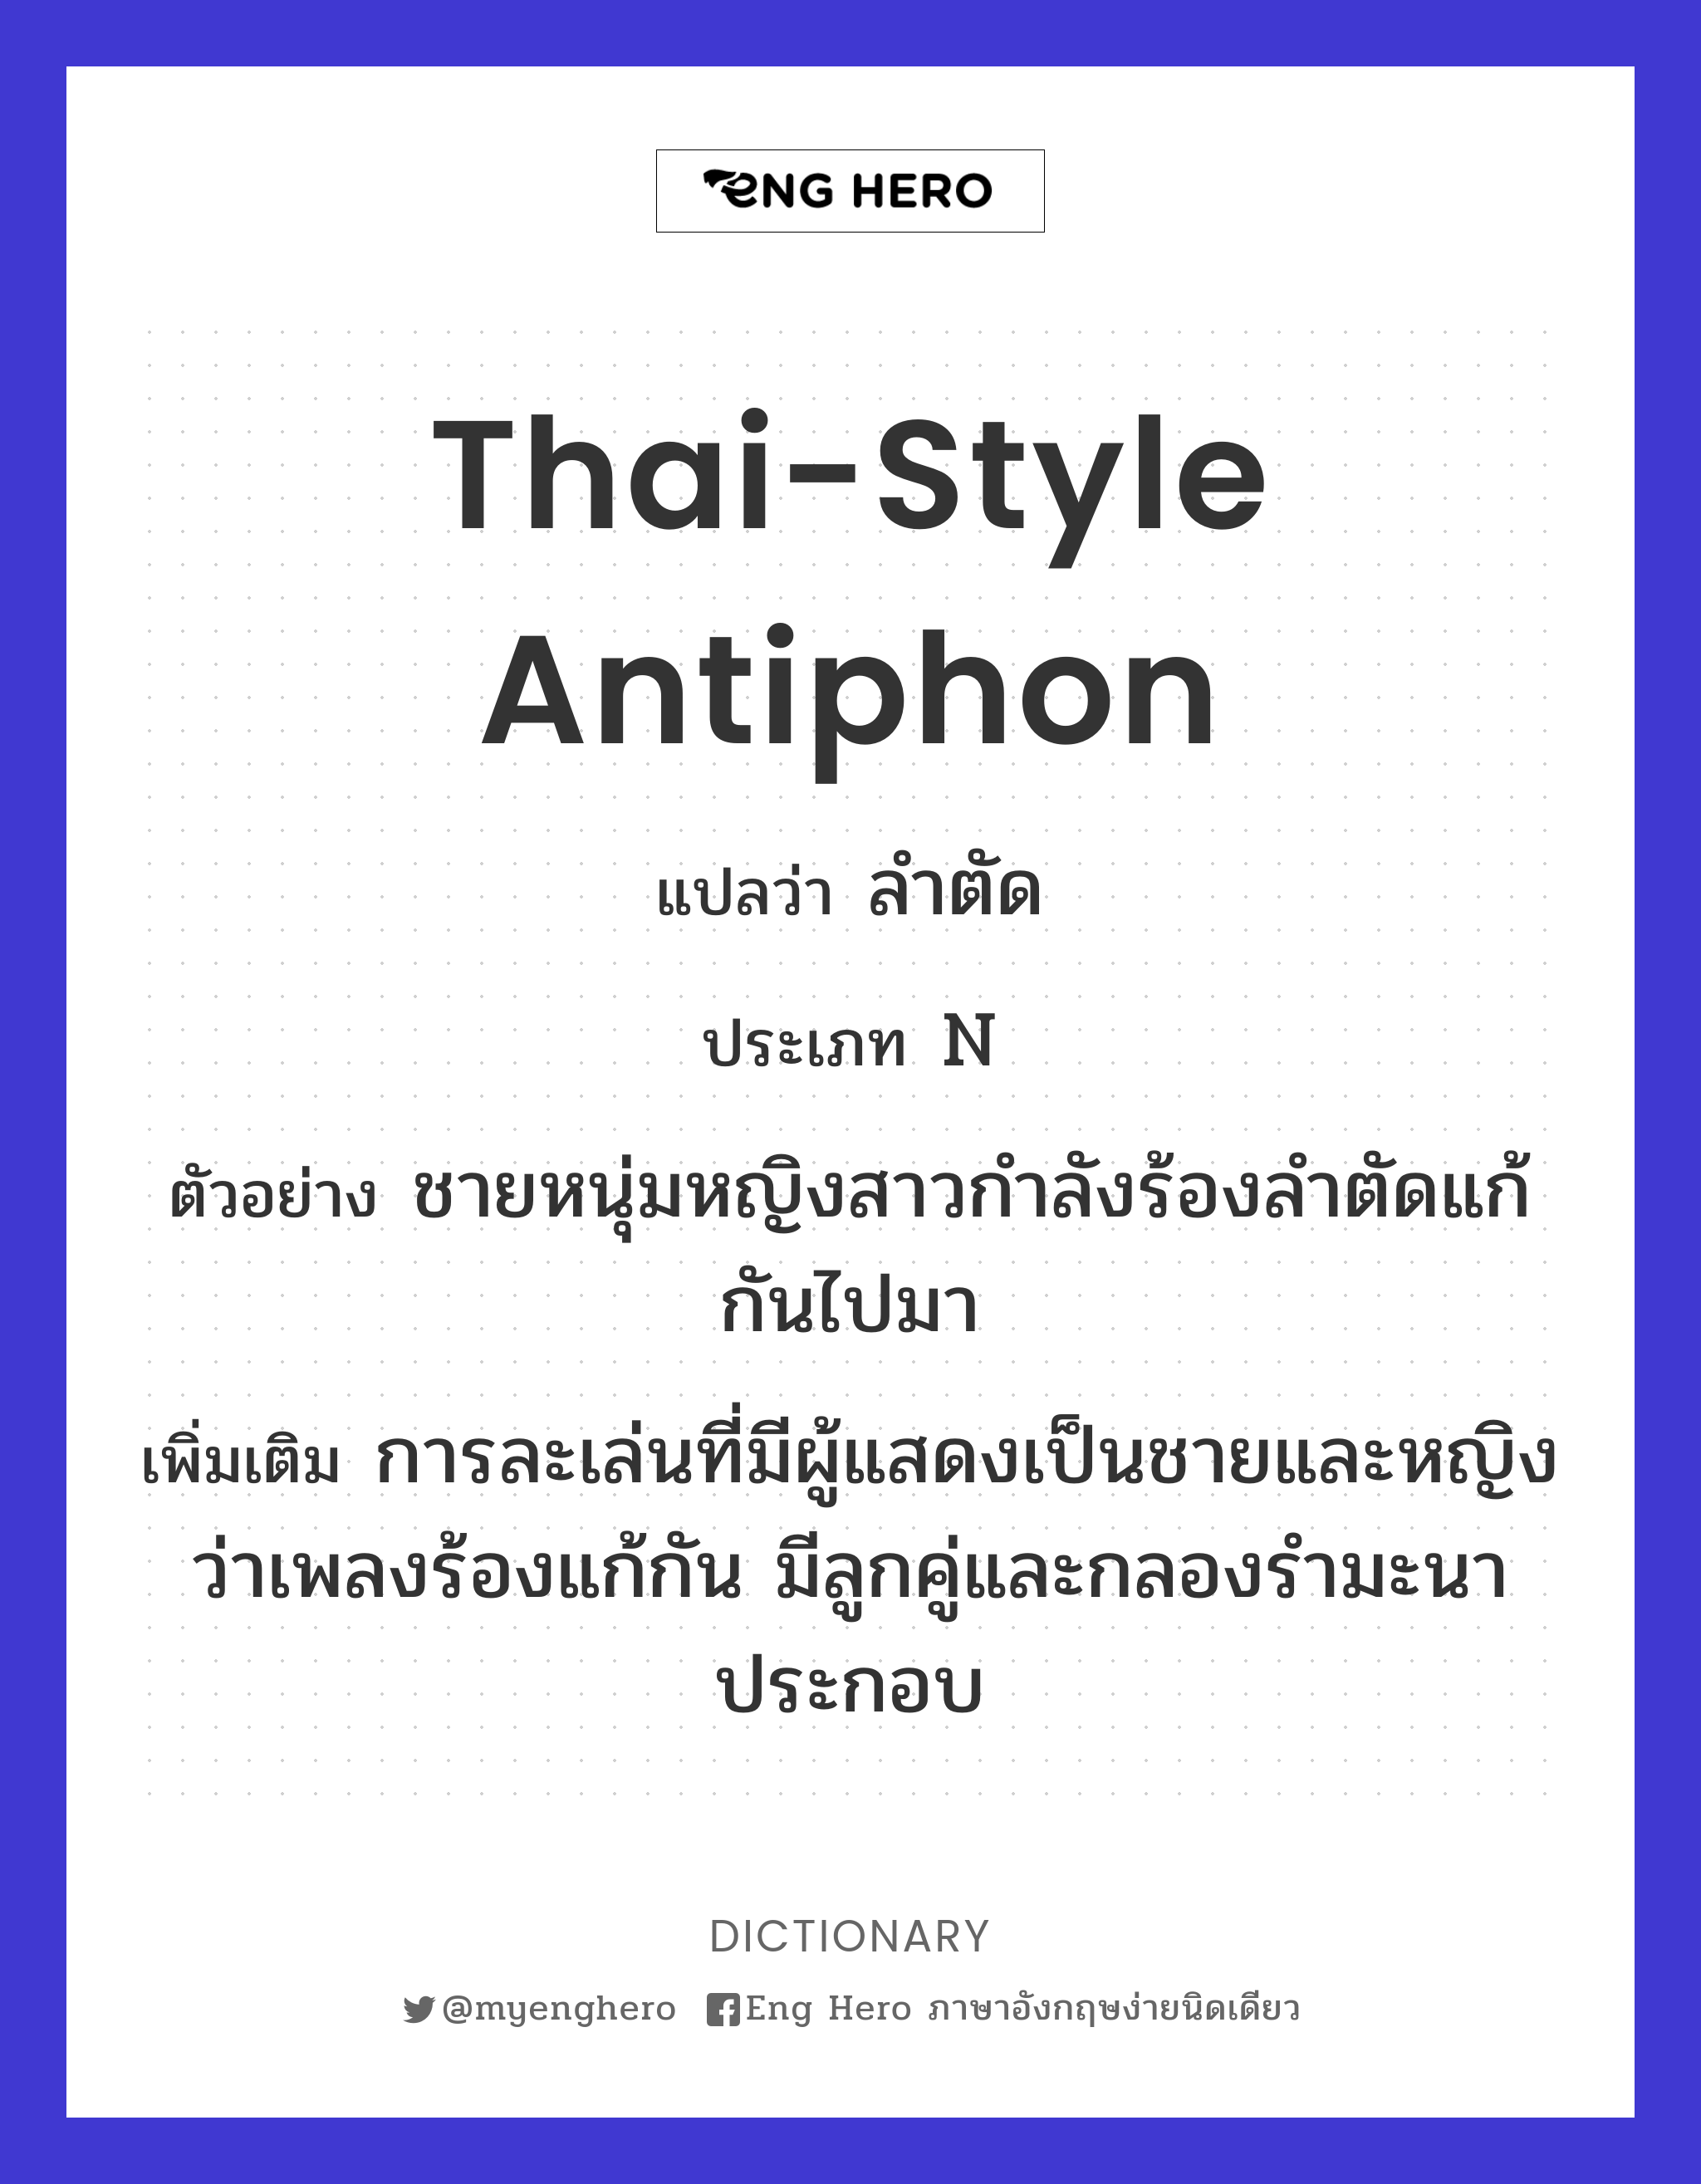 Thai-style antiphon